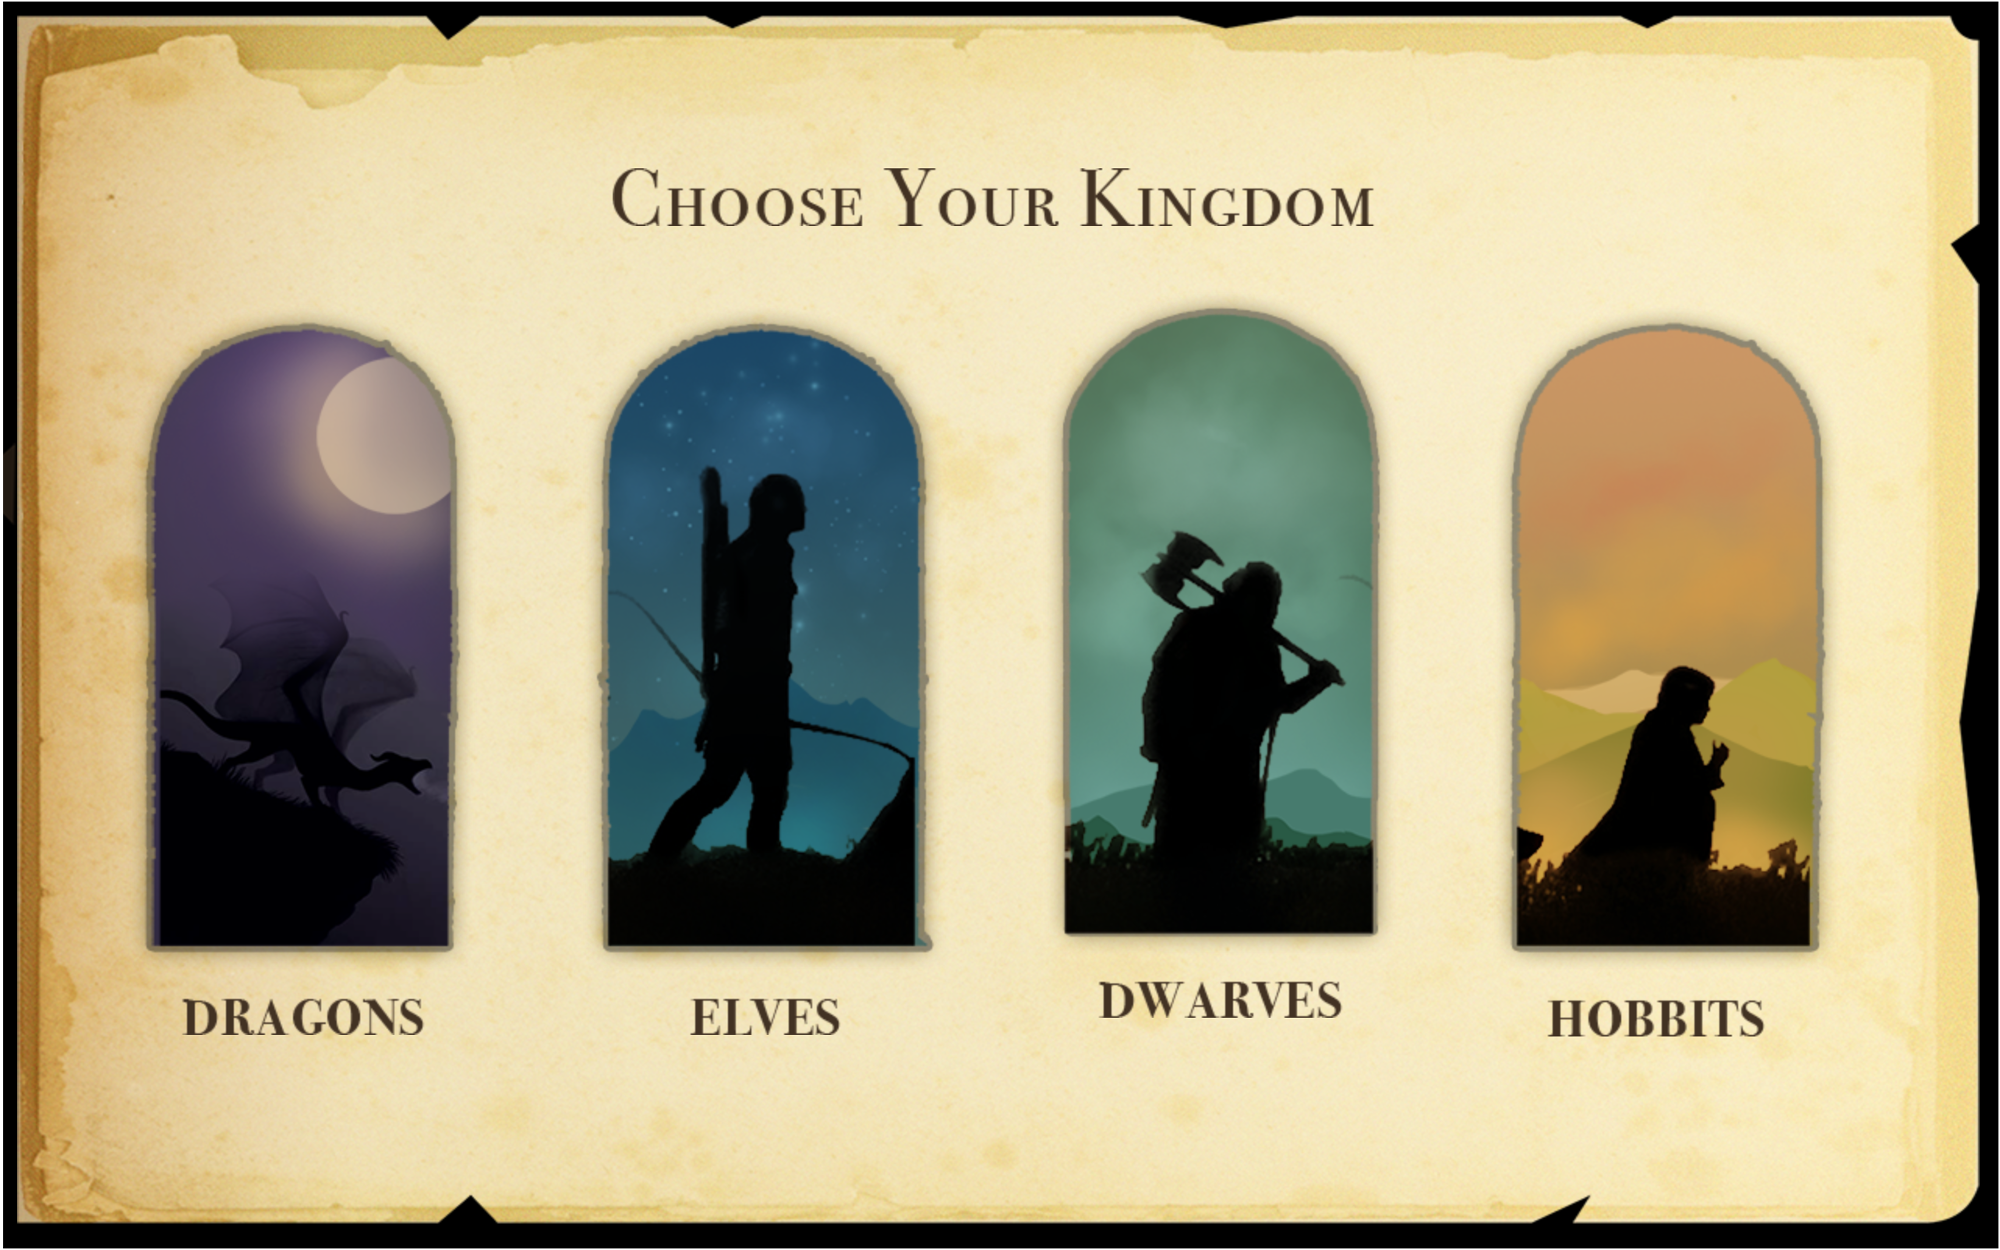 2. Choose Your Kingdom